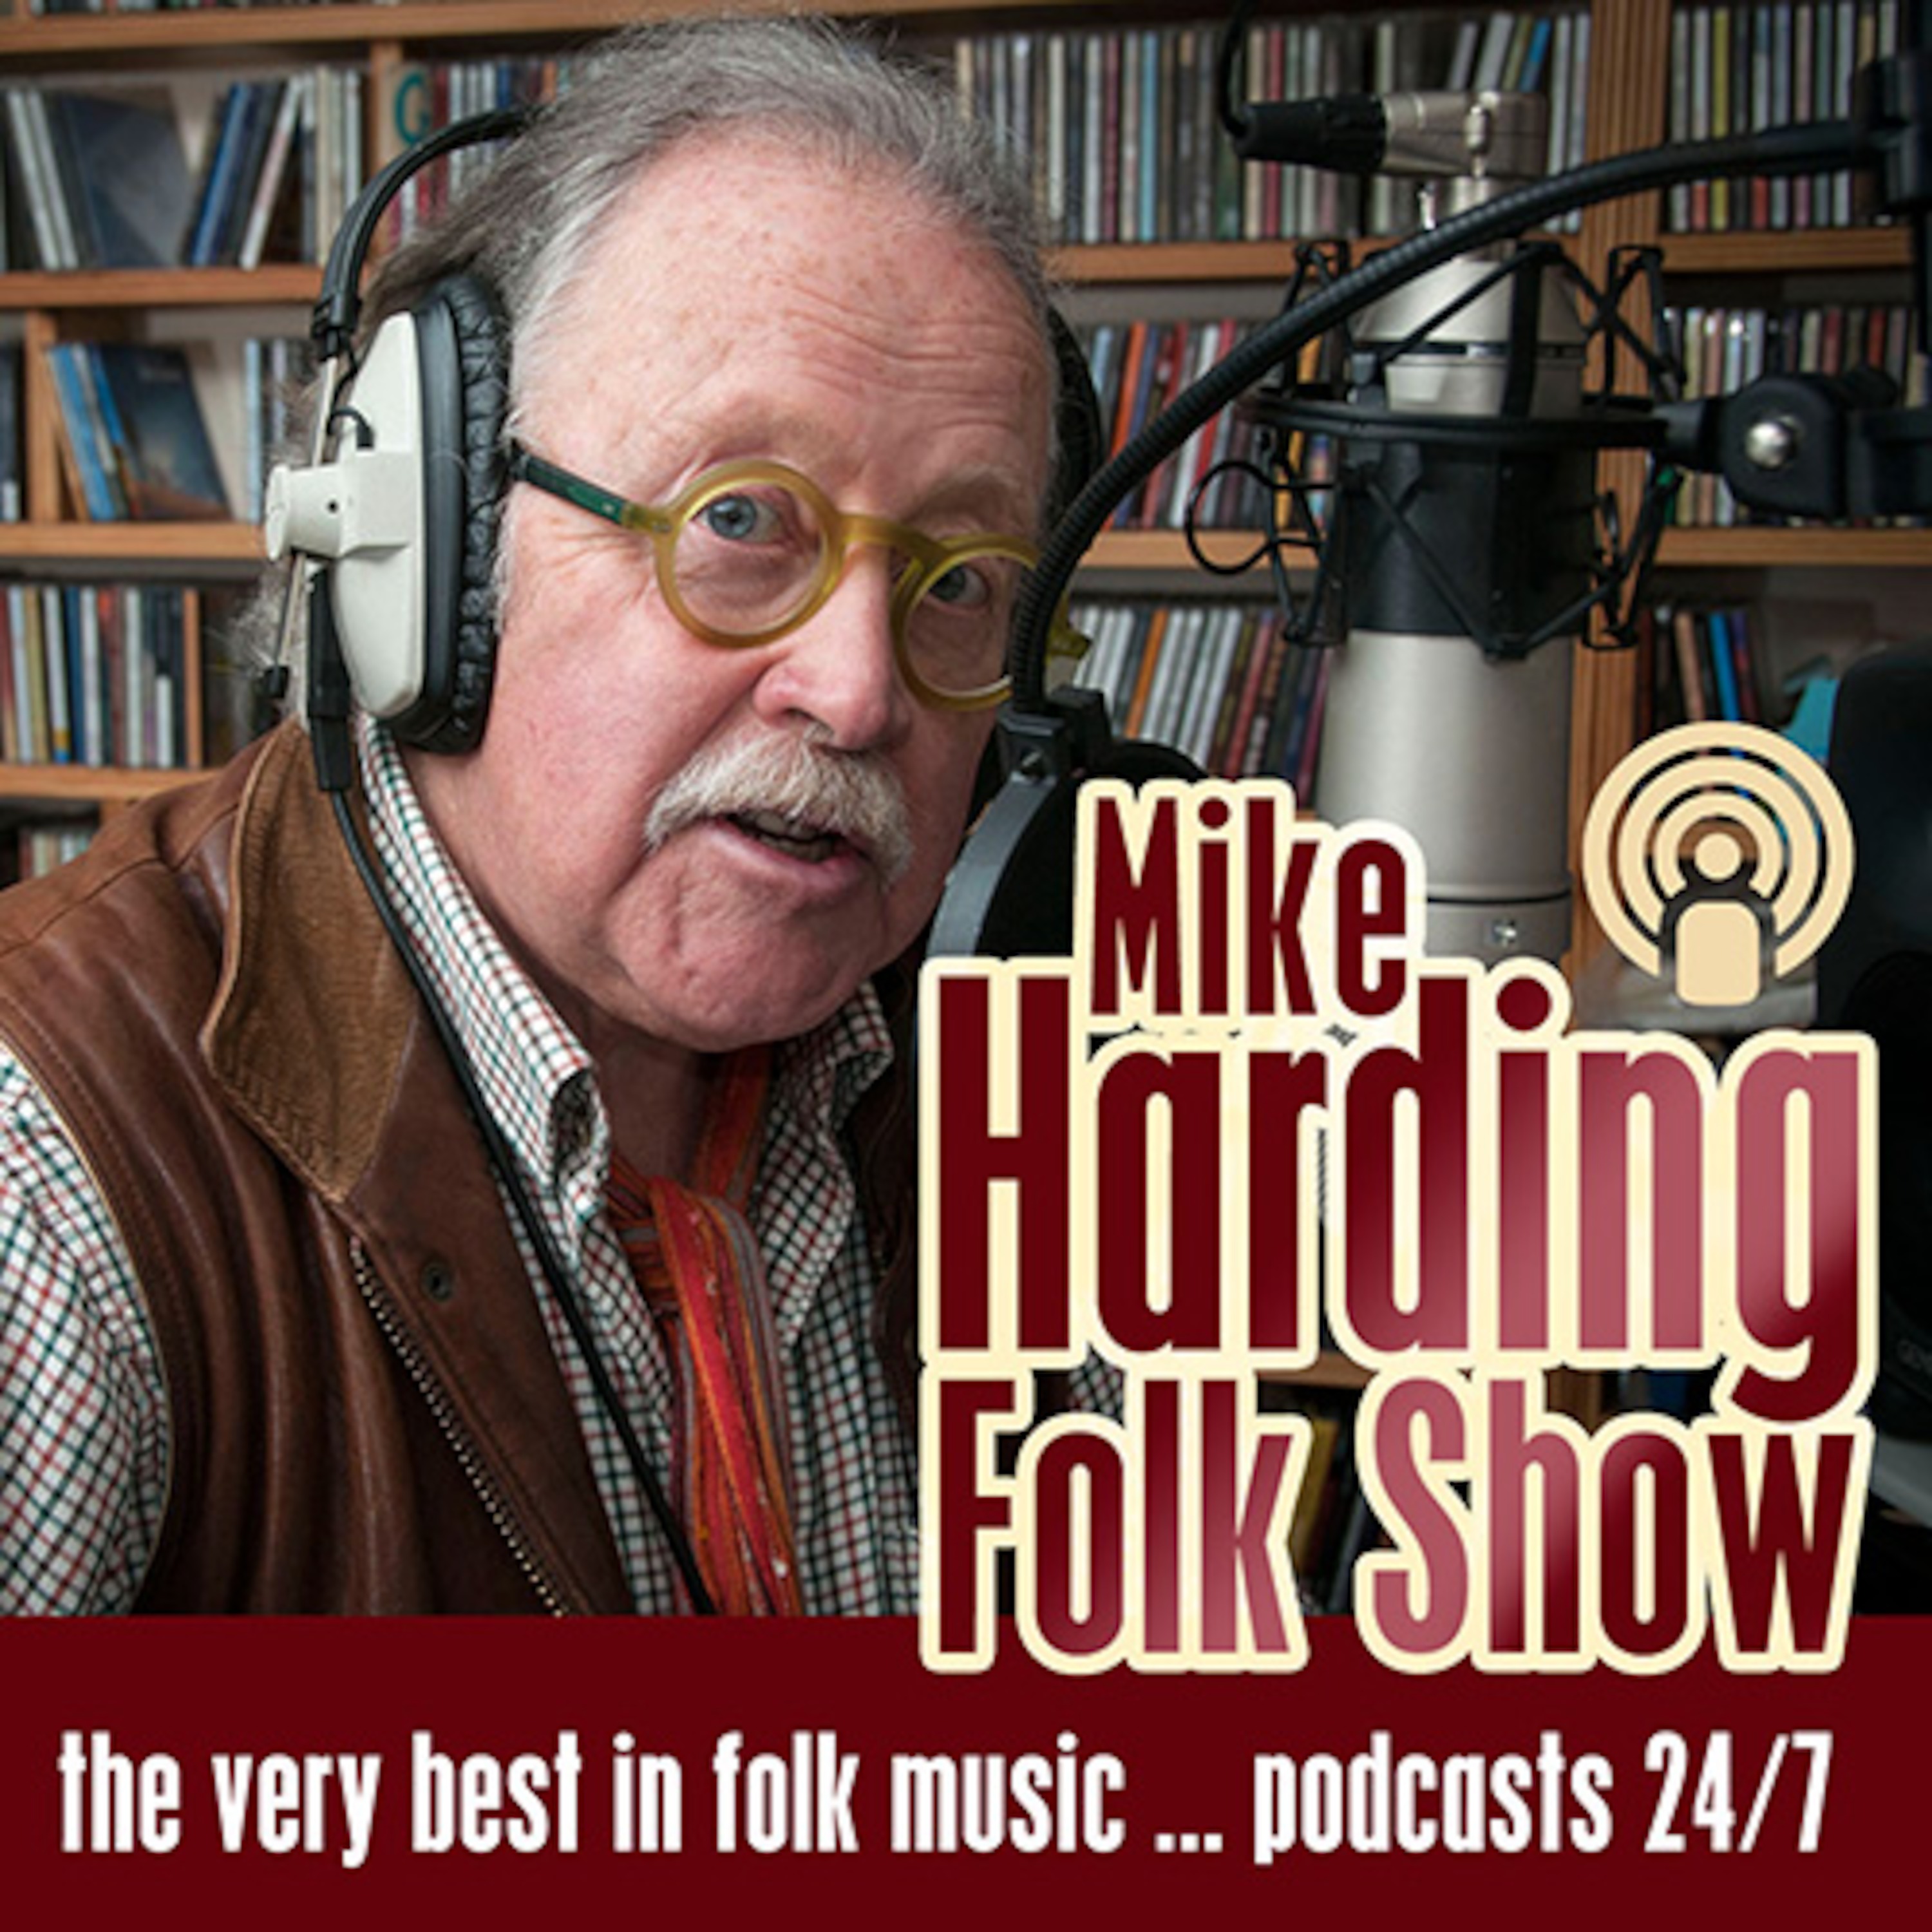 Mike Harding Folk Show 208